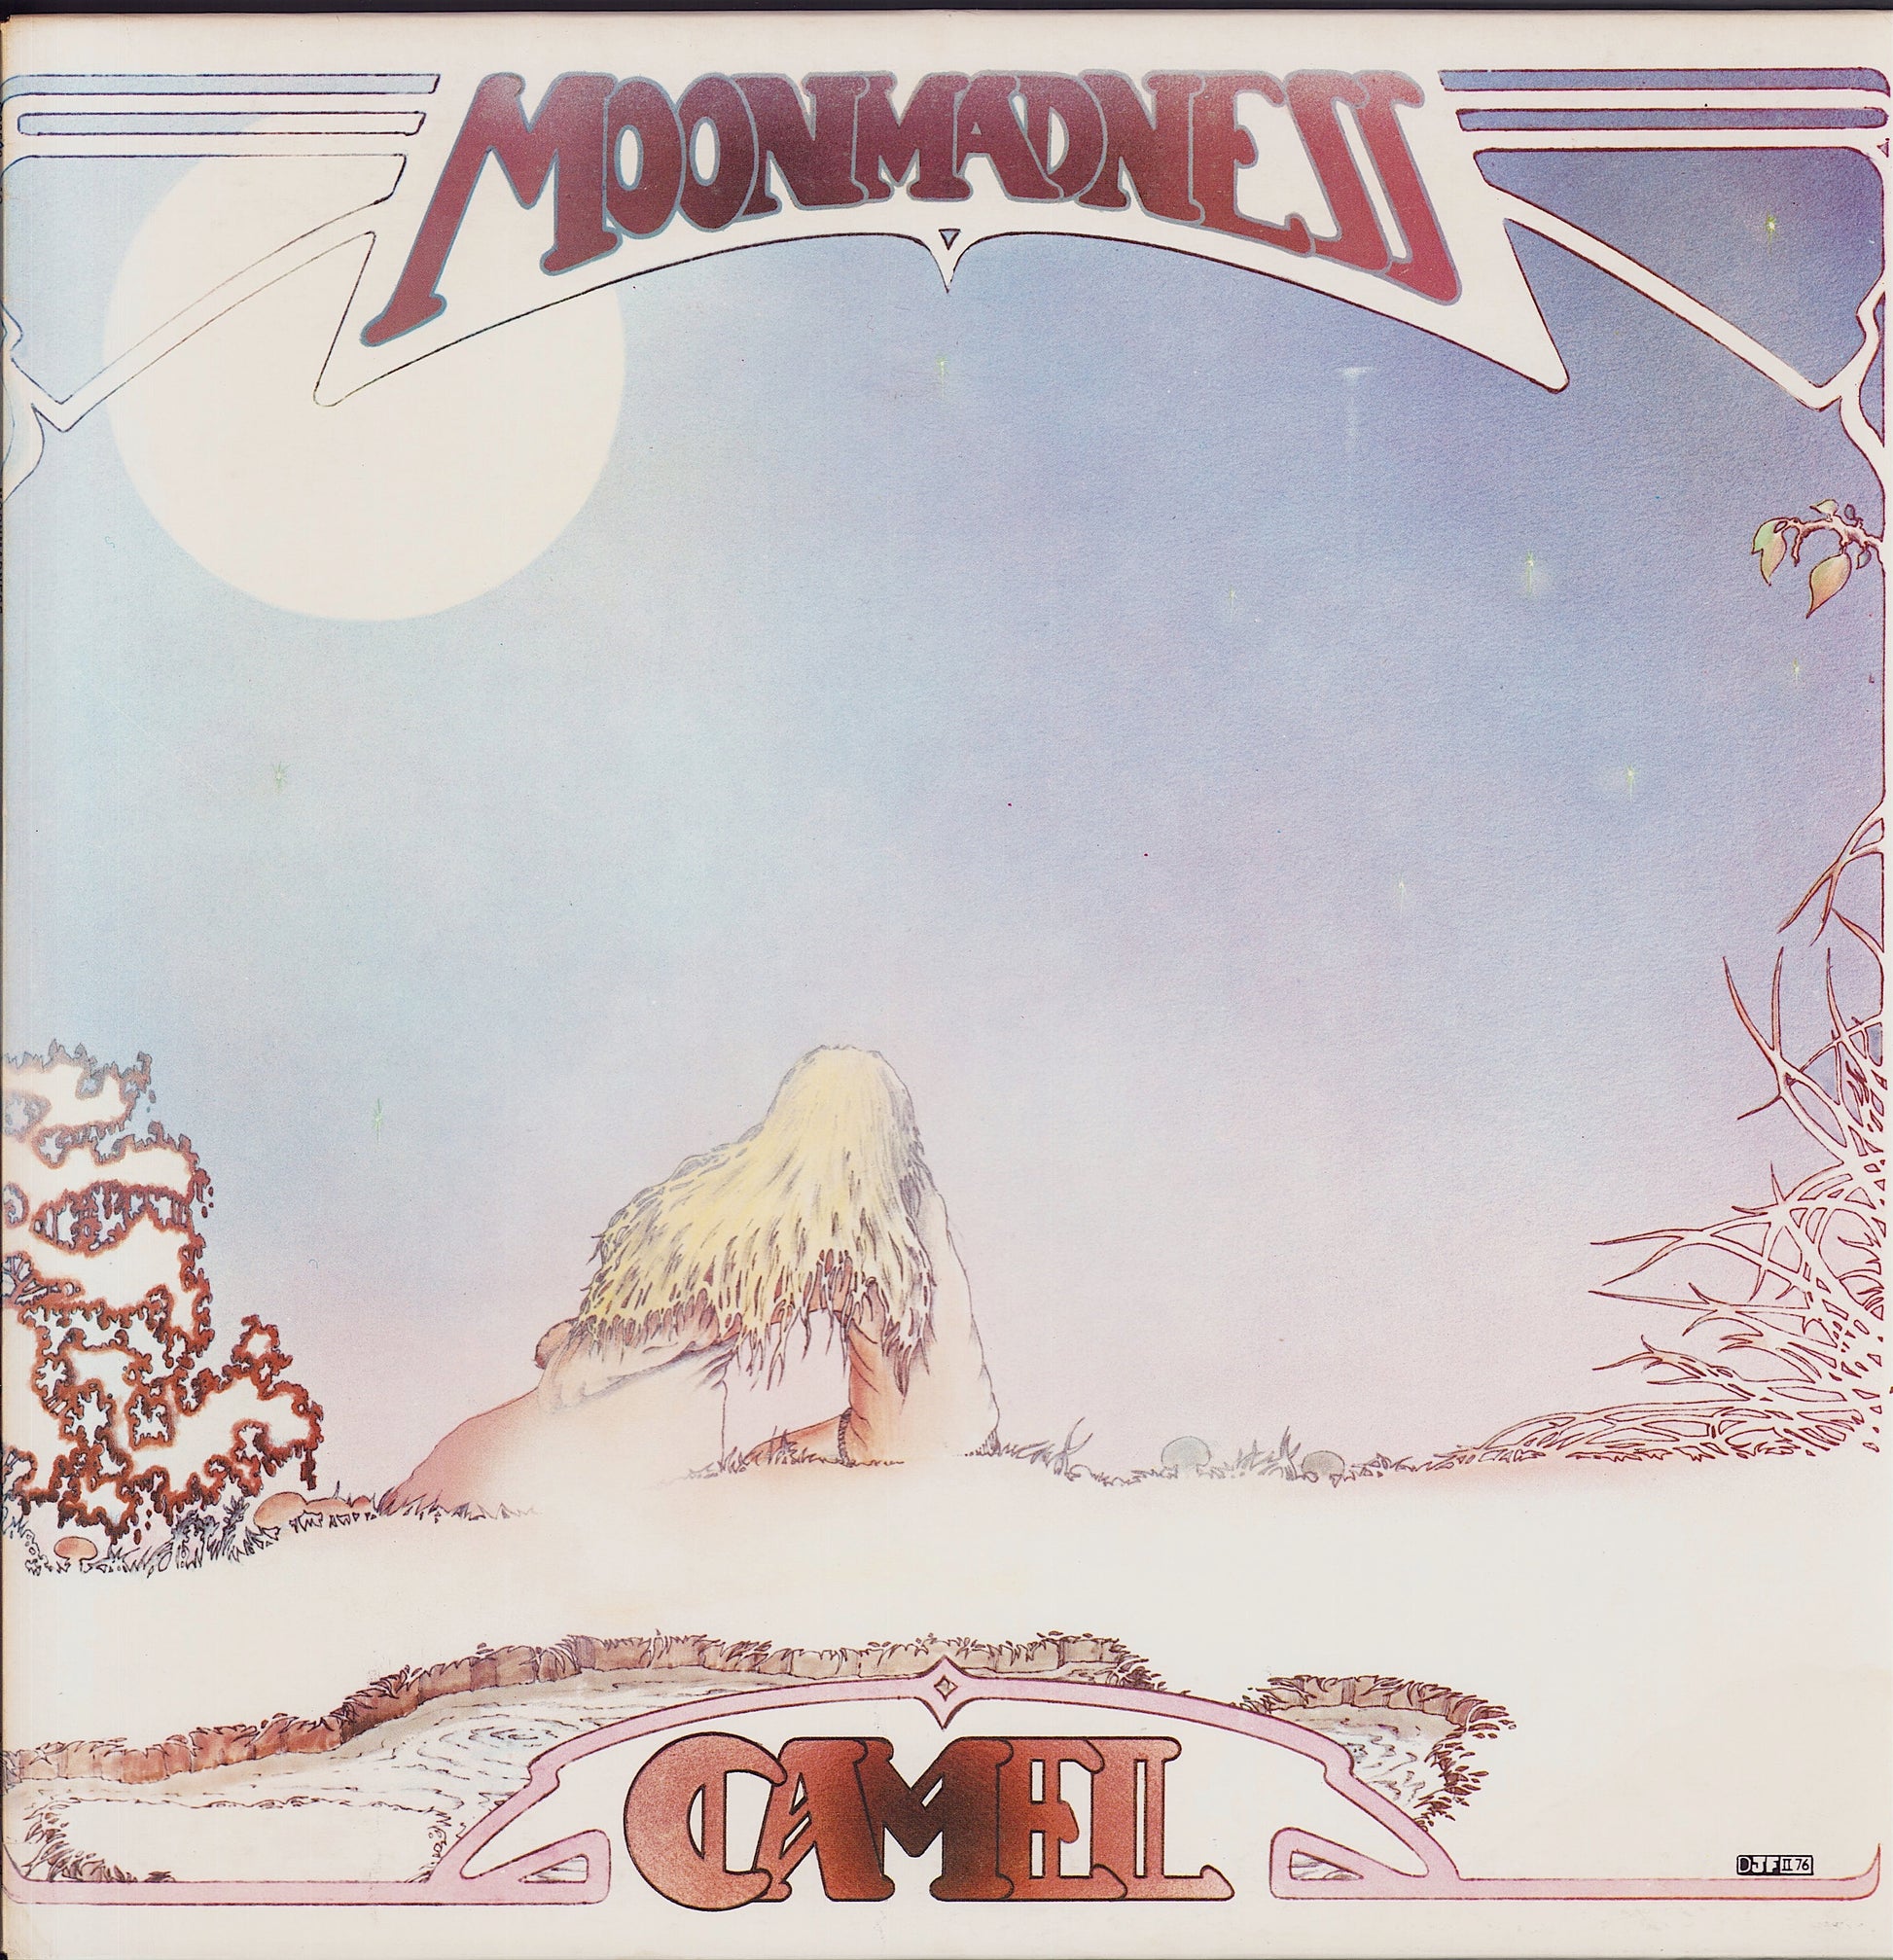 Camel ‎- Moonmadness Vinyl LP